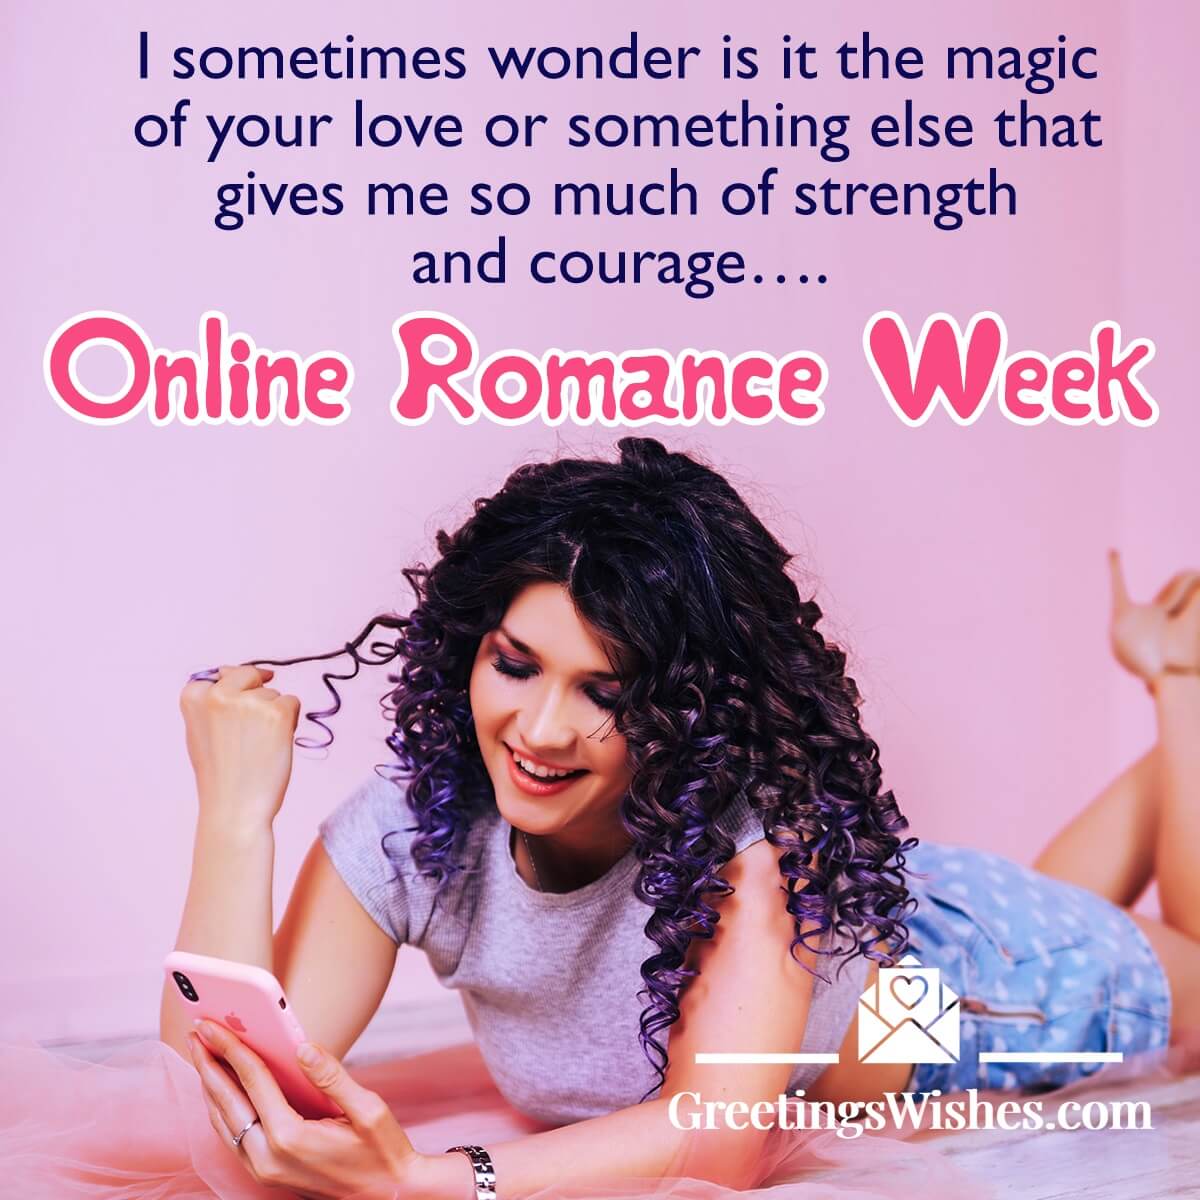 Online Romance Week Message For Girlfriend